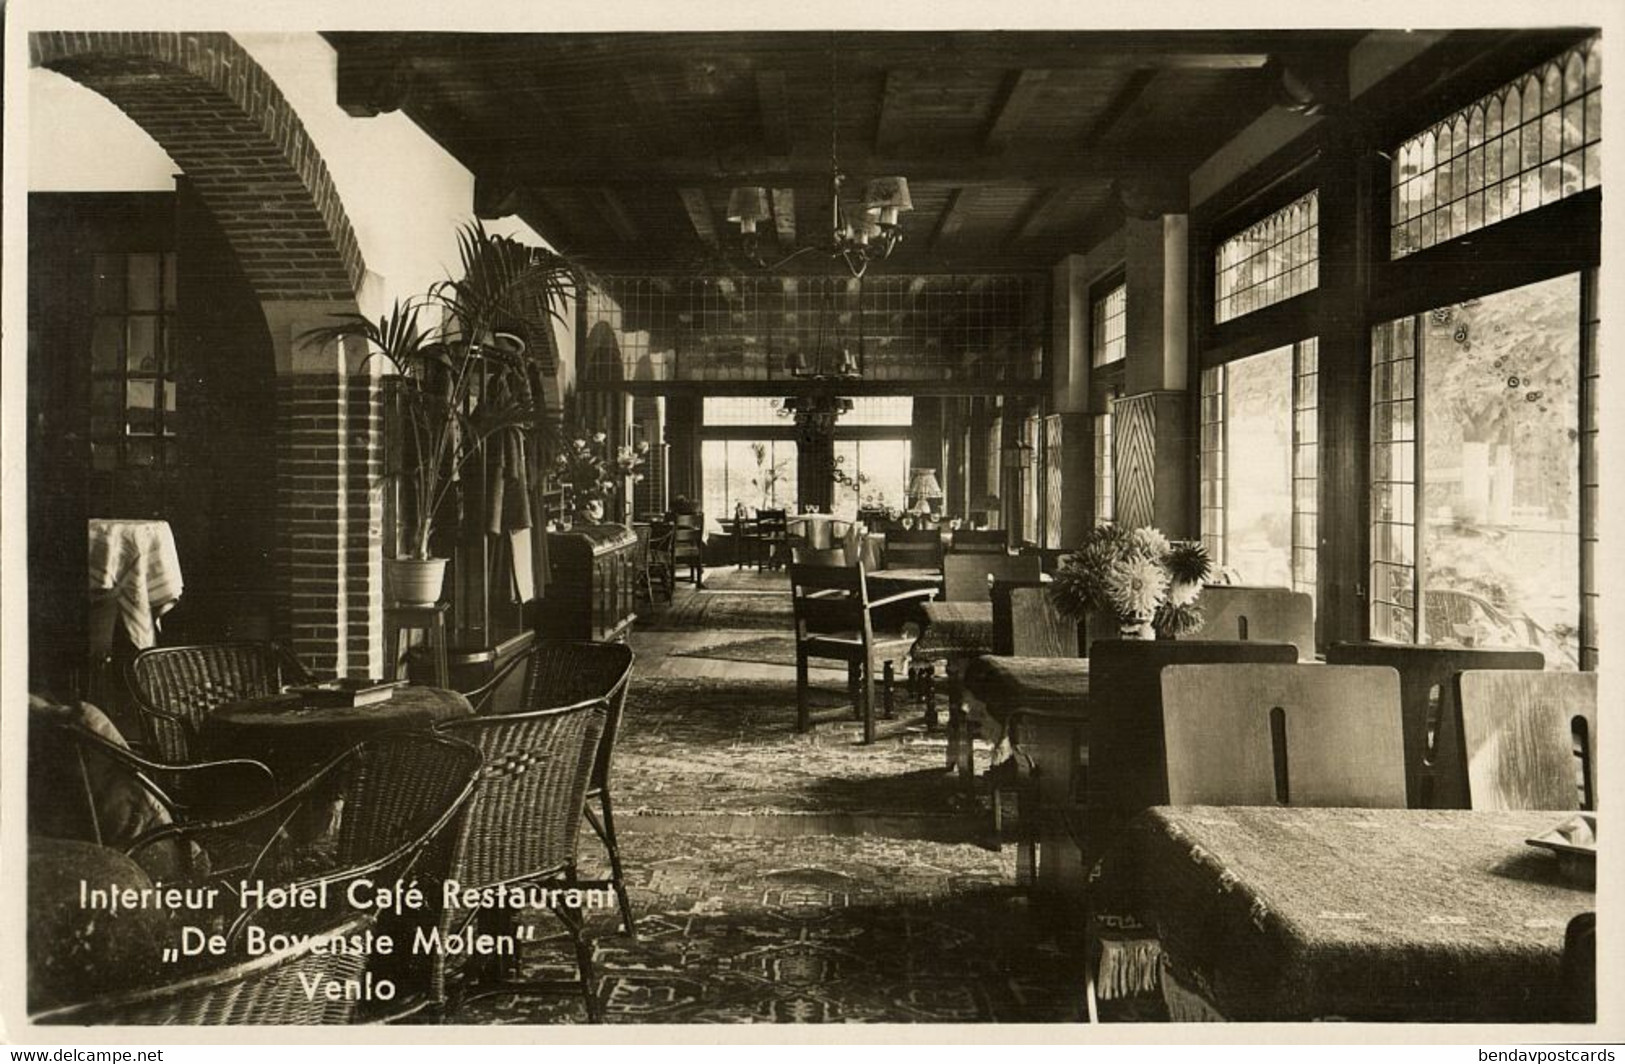 Nederland, VENLO, Hotel Cafe "De Bovenste Molen, Interieur" (1930s) Ansichtkaart - Venlo